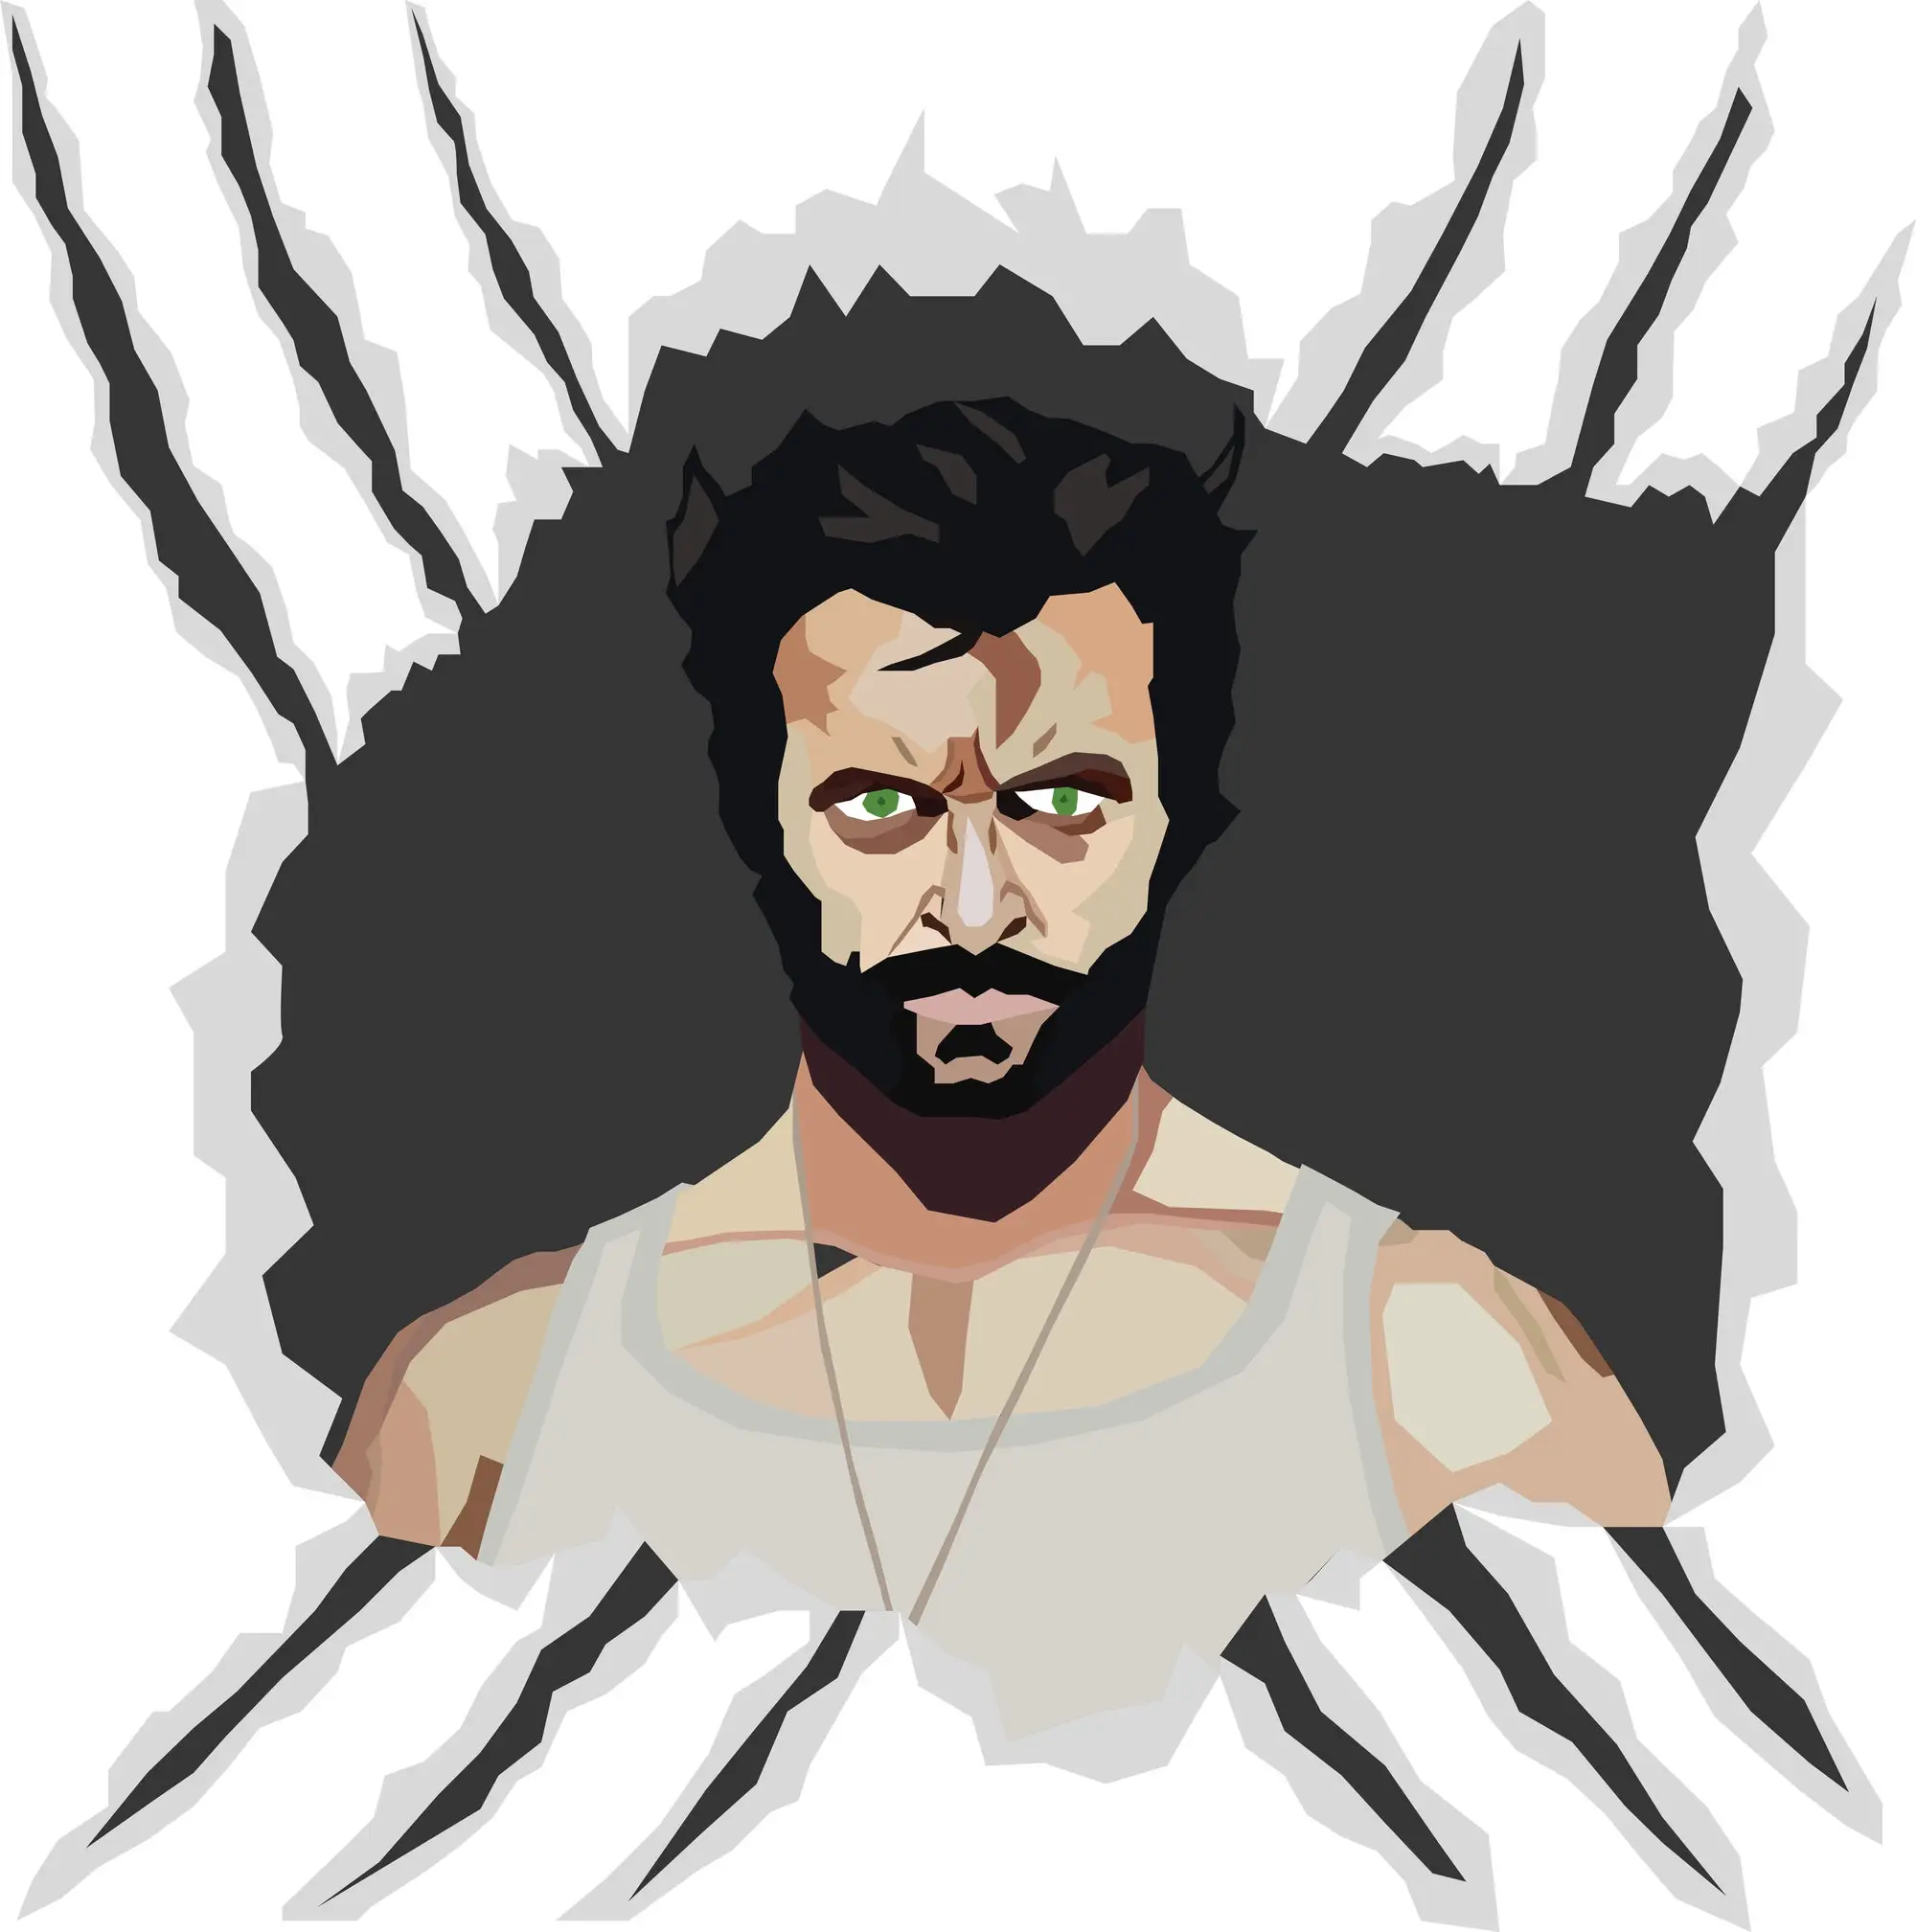 Adobe Illustrator illustration of Hugh Jackman as Wolverine